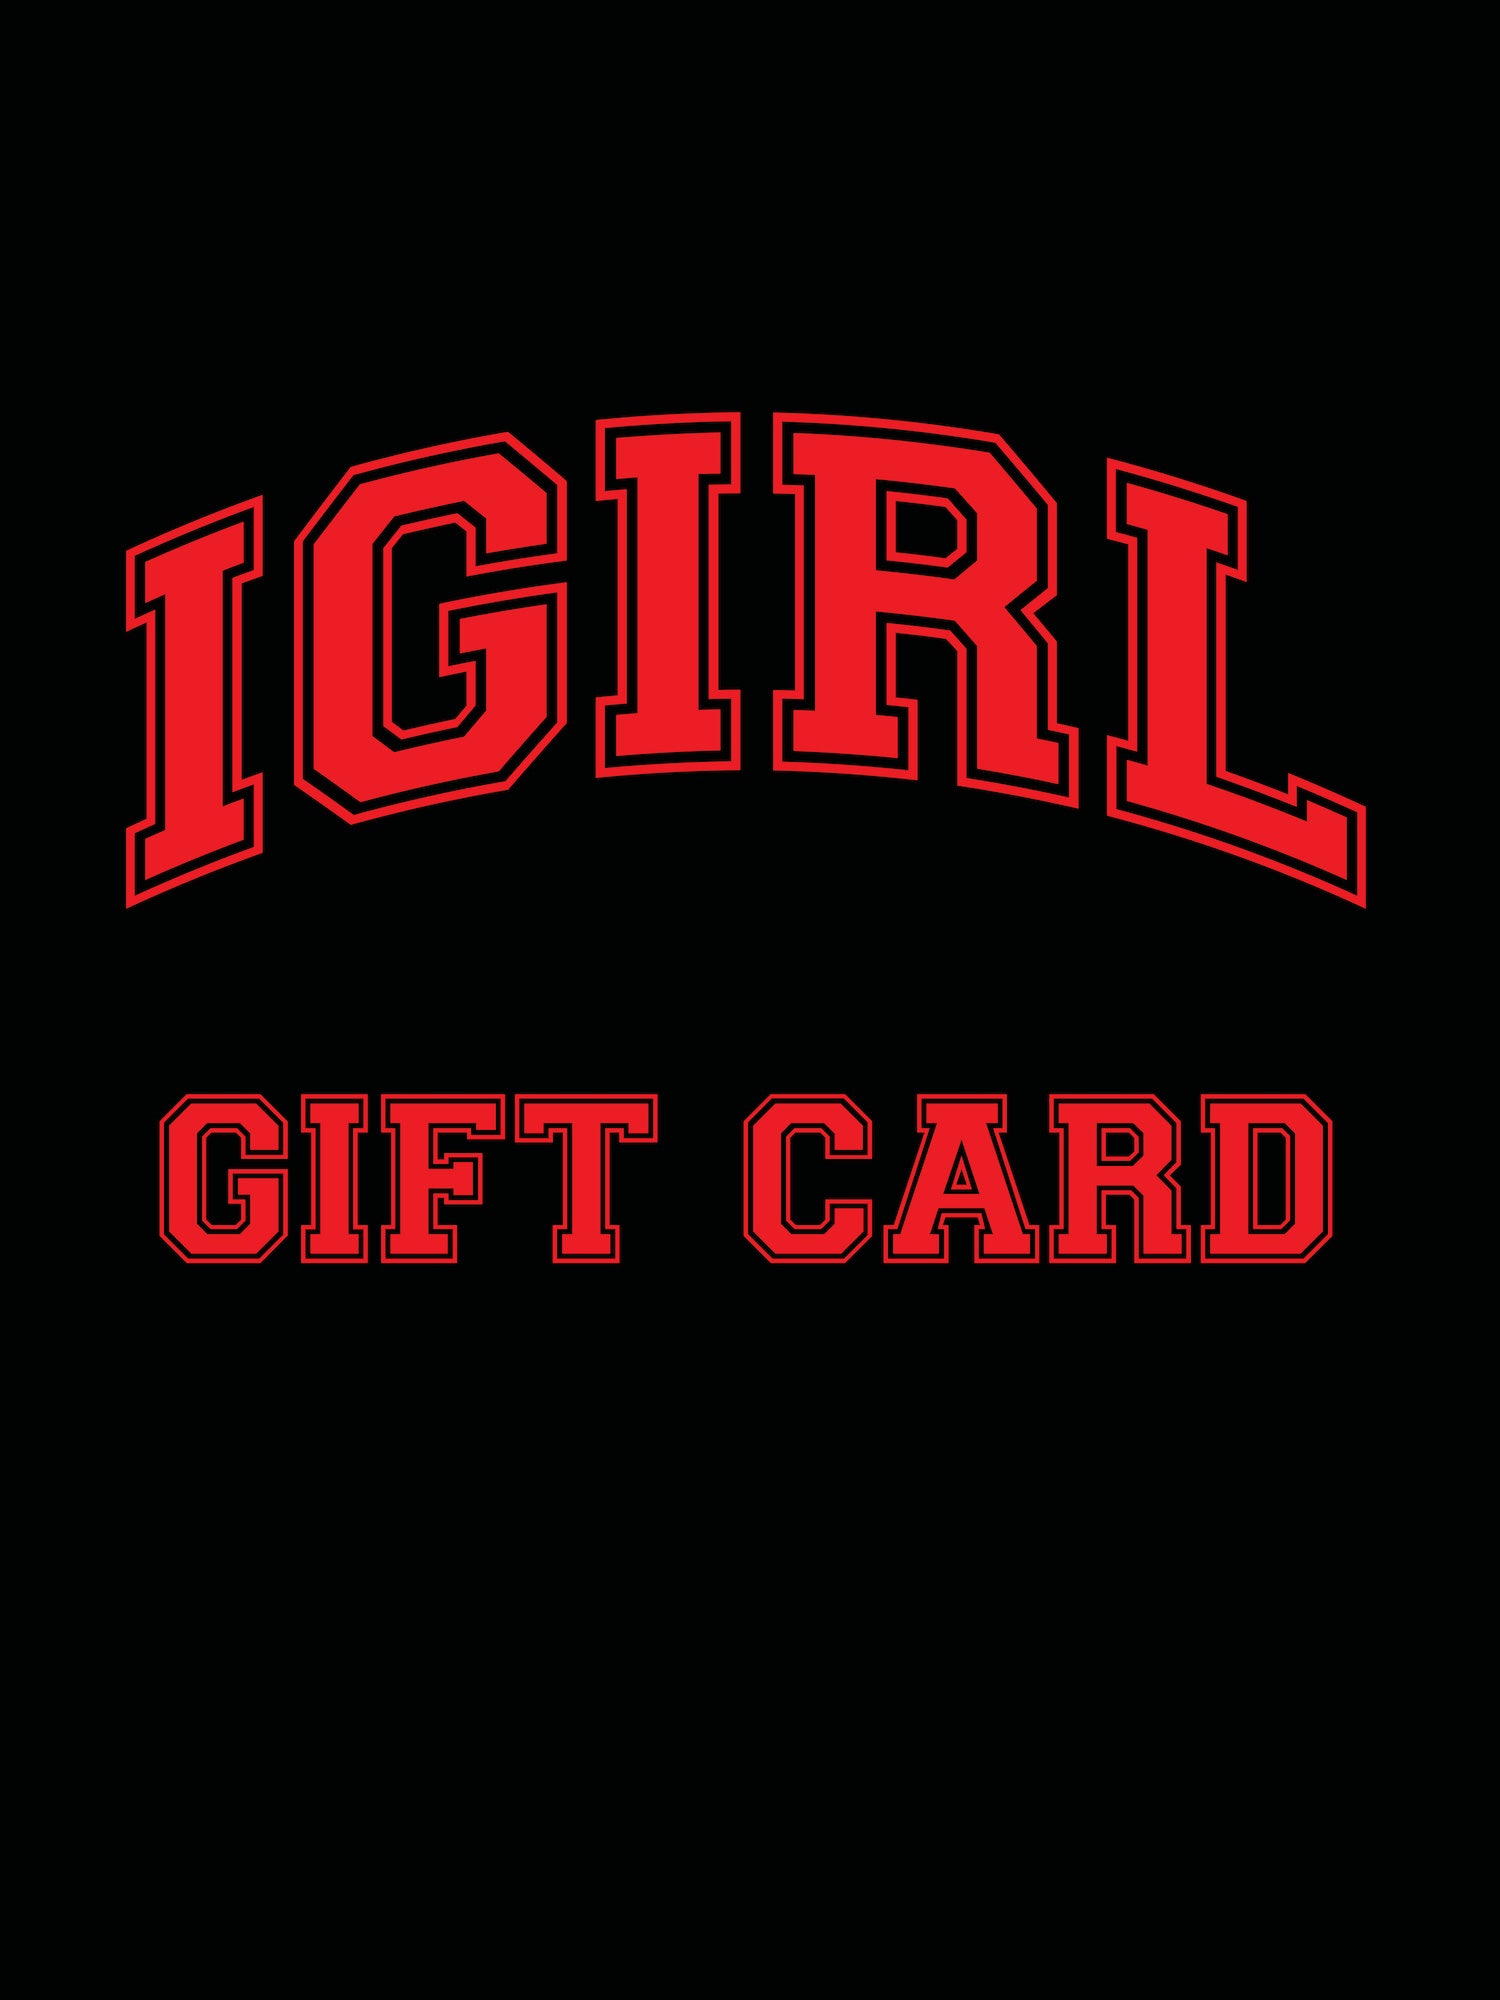 iGirl Gift Card